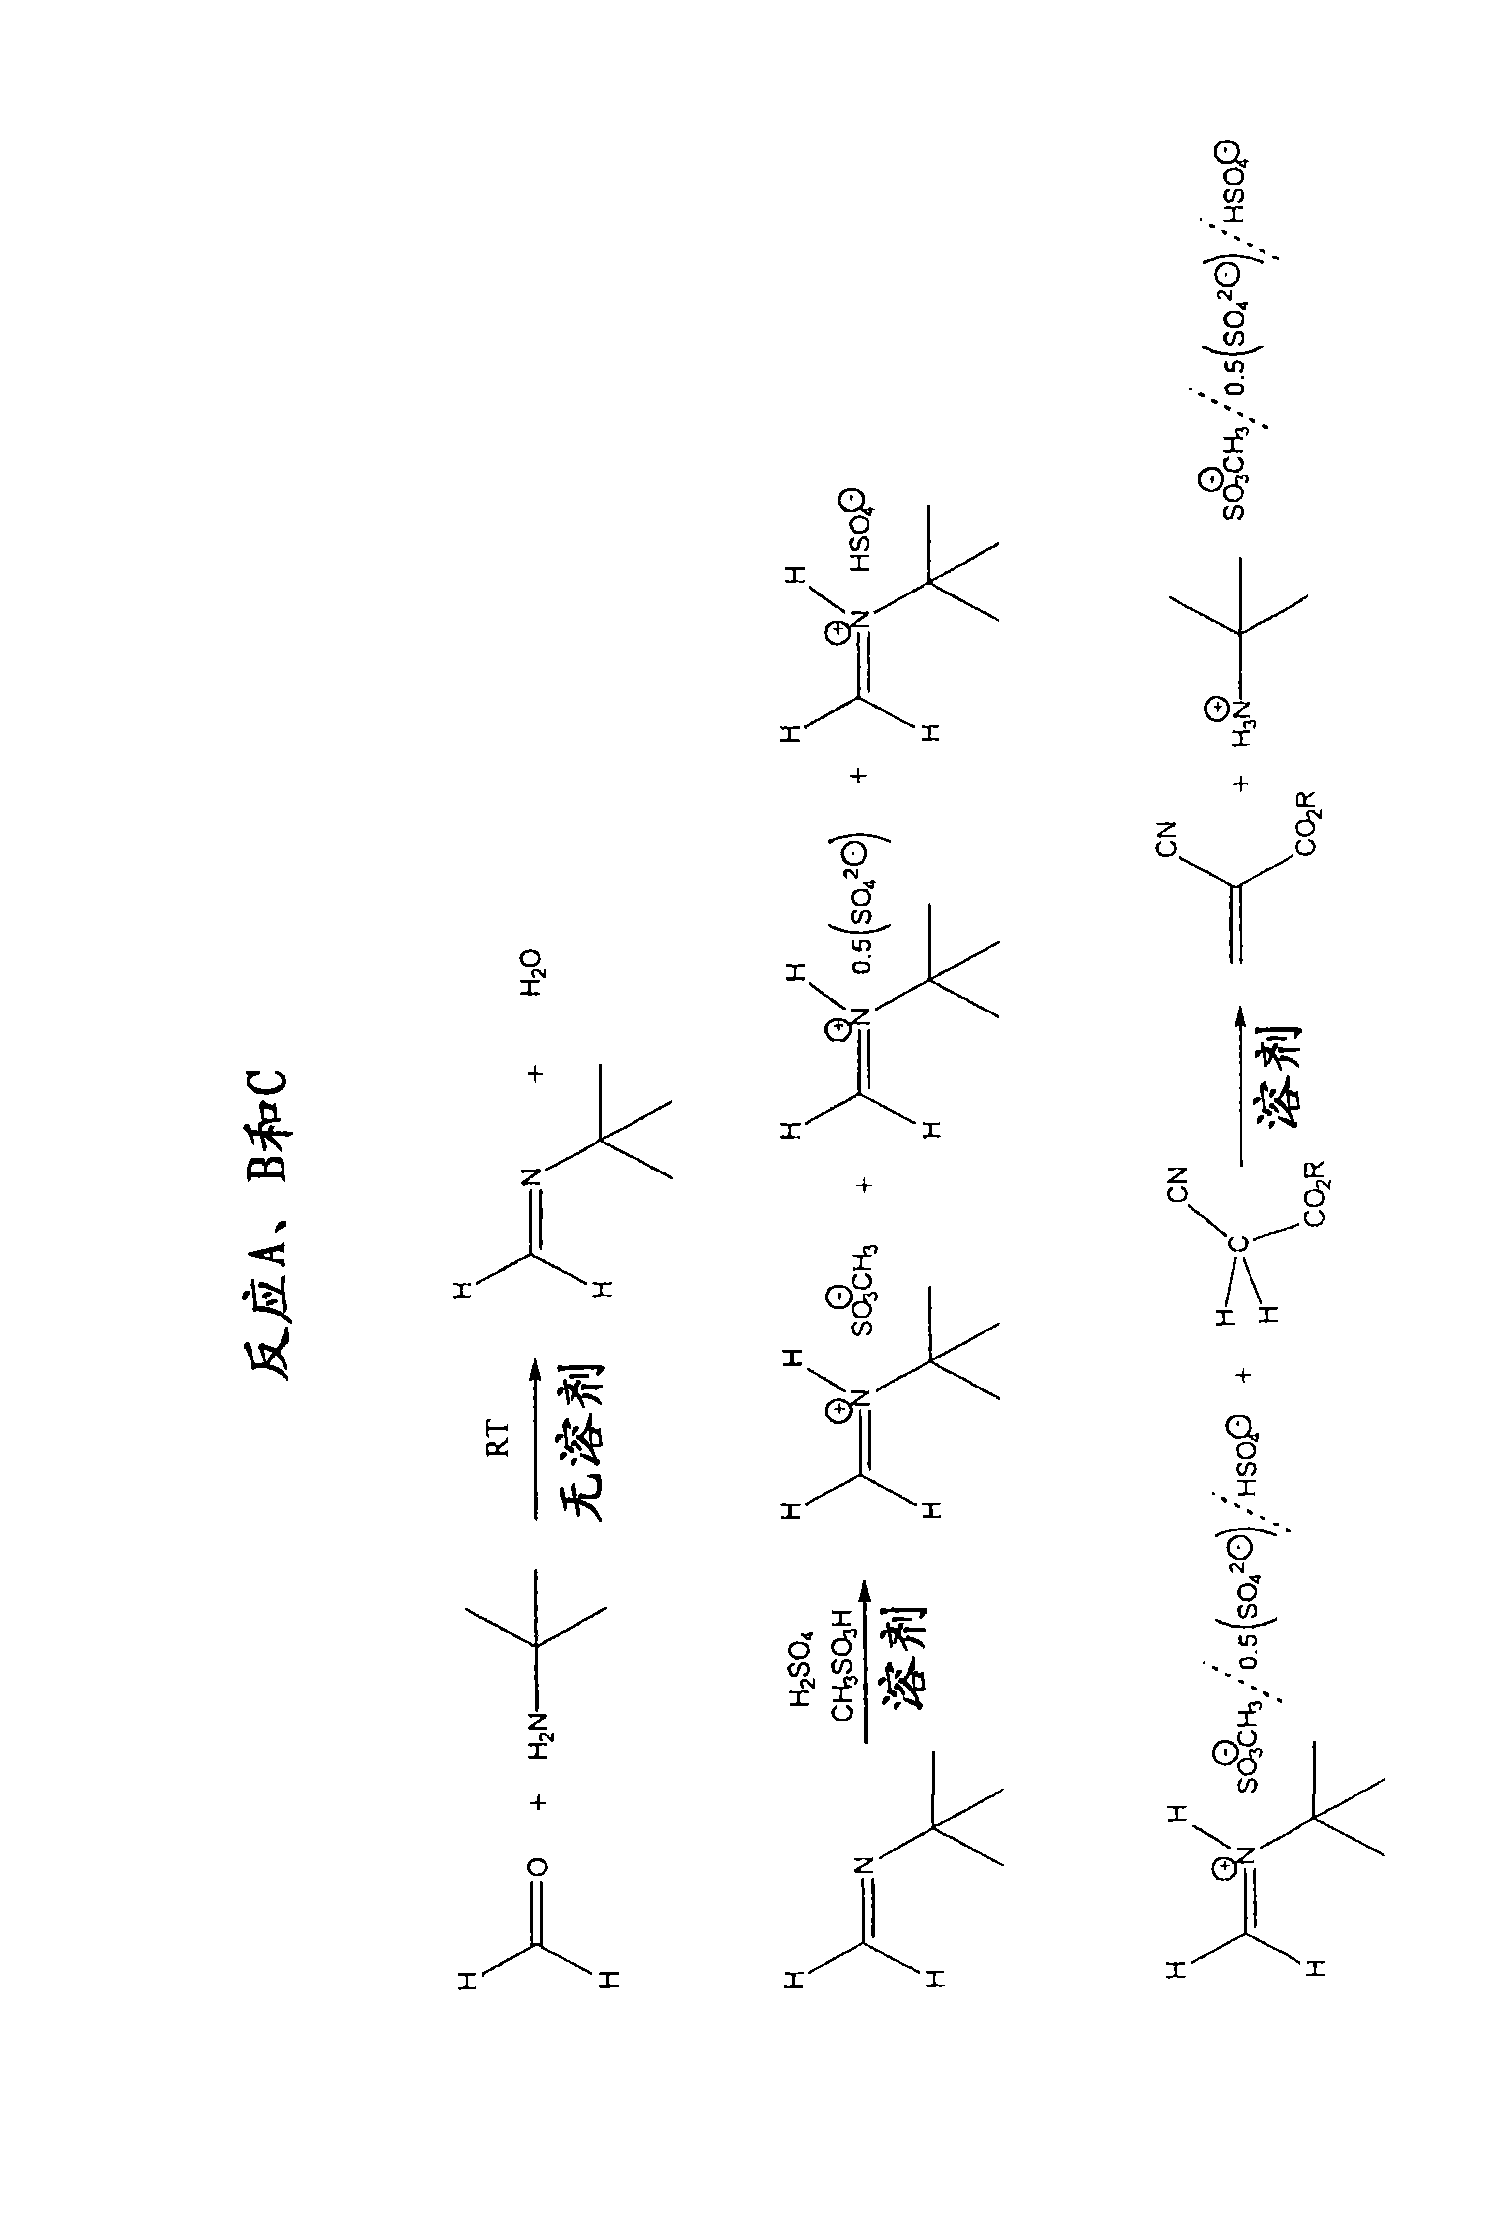 Iminium salts and methods of preparing electron deficient olefins using such novel iminium salts